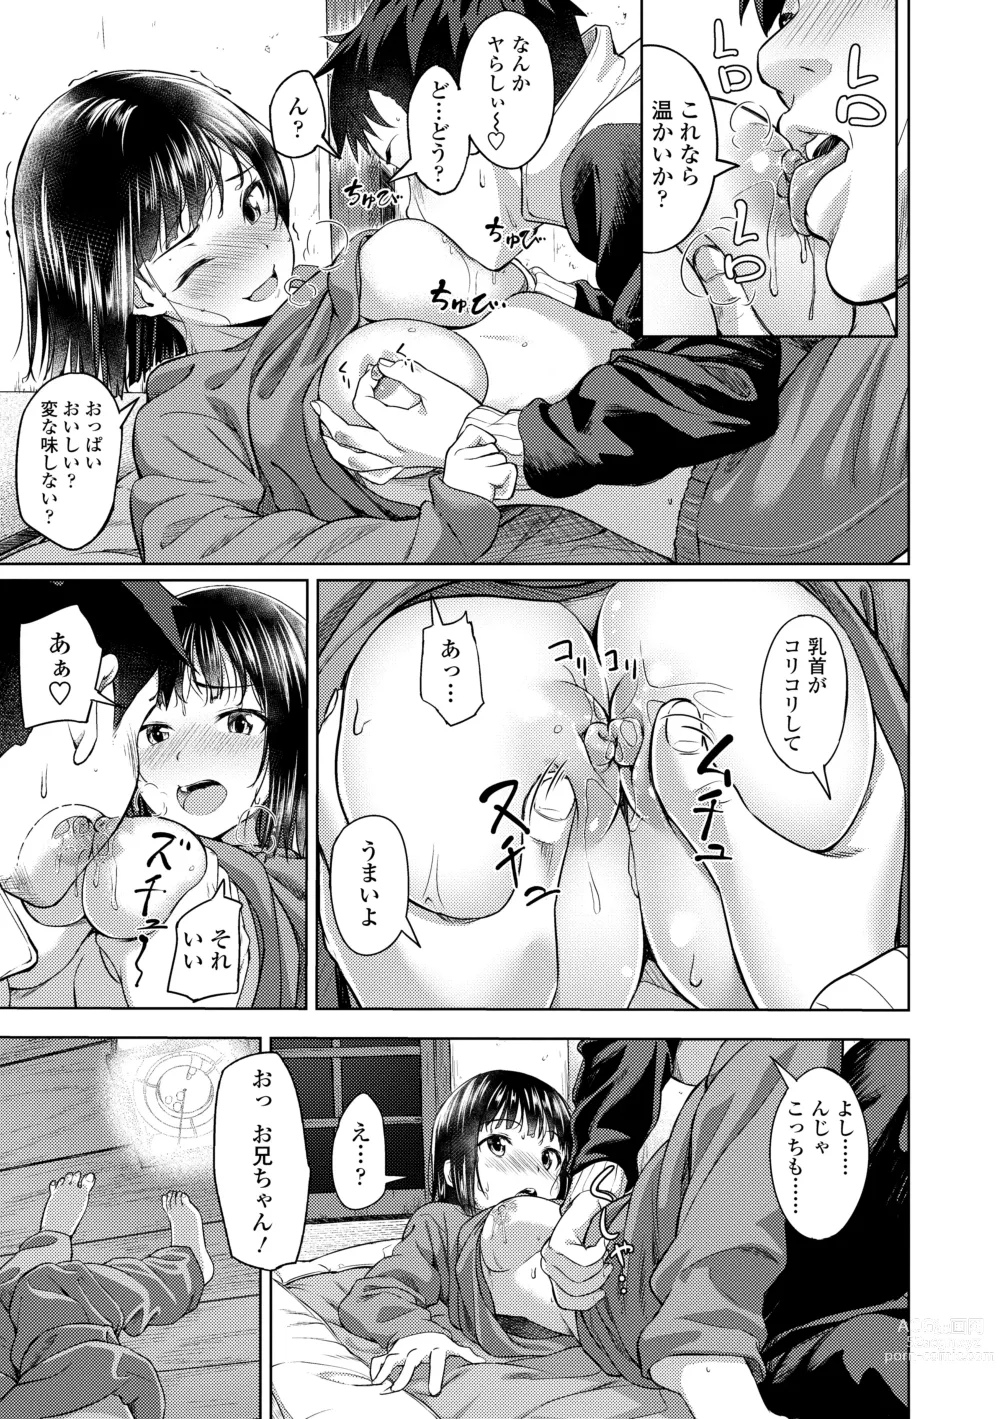 Page 11 of manga Aolove